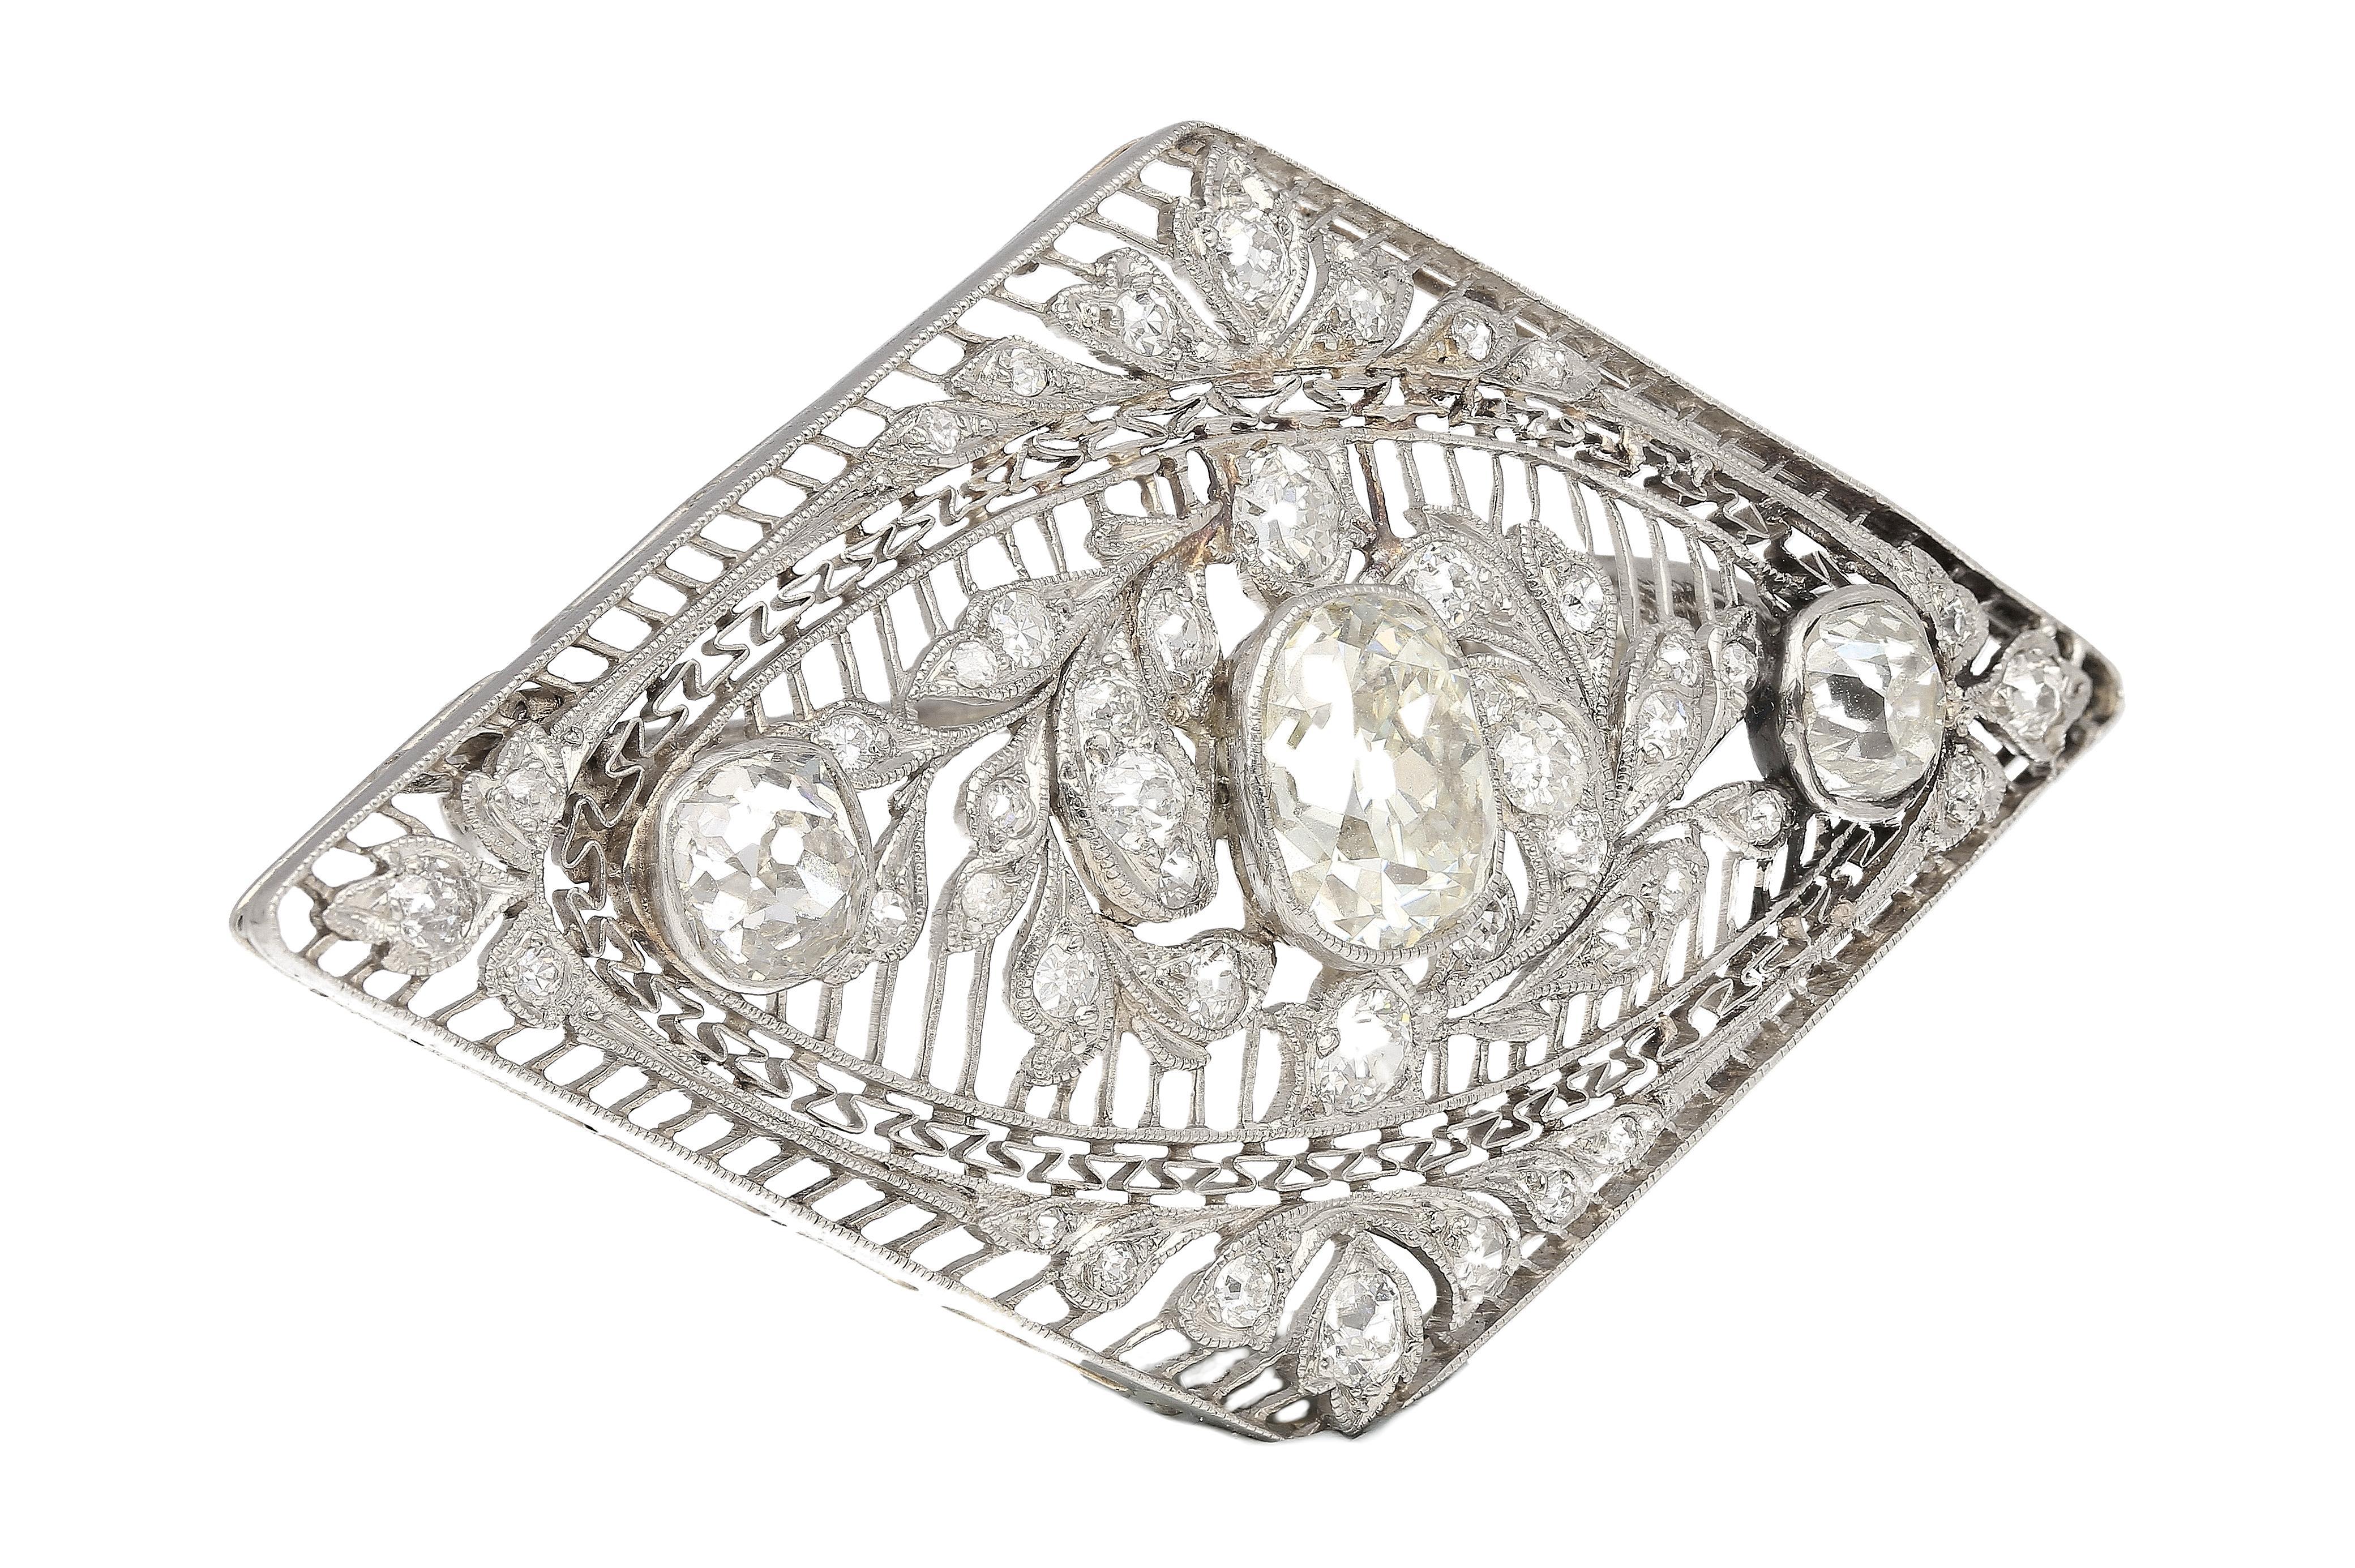 3.5 Carat Old European Cut Art Deco Diamond Brooch in Textured Filigree Platinum For Sale 1